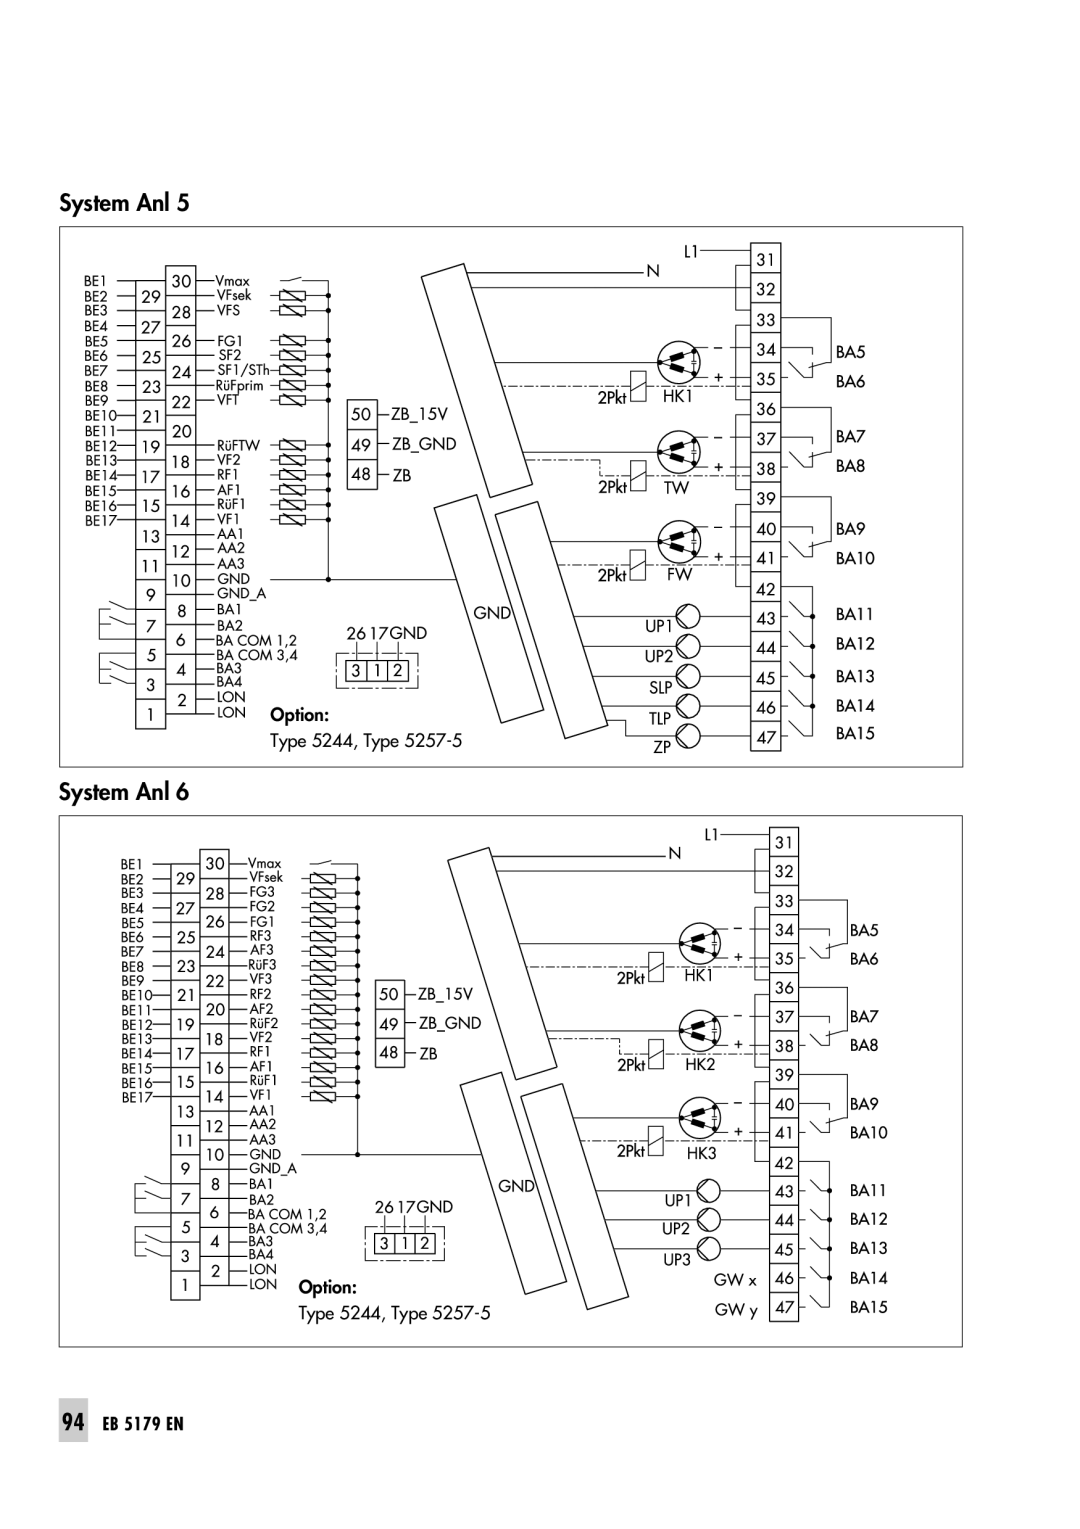 Samson 5100 operating instructions Option, 94EB 5179 EN, Type 5244, Type 